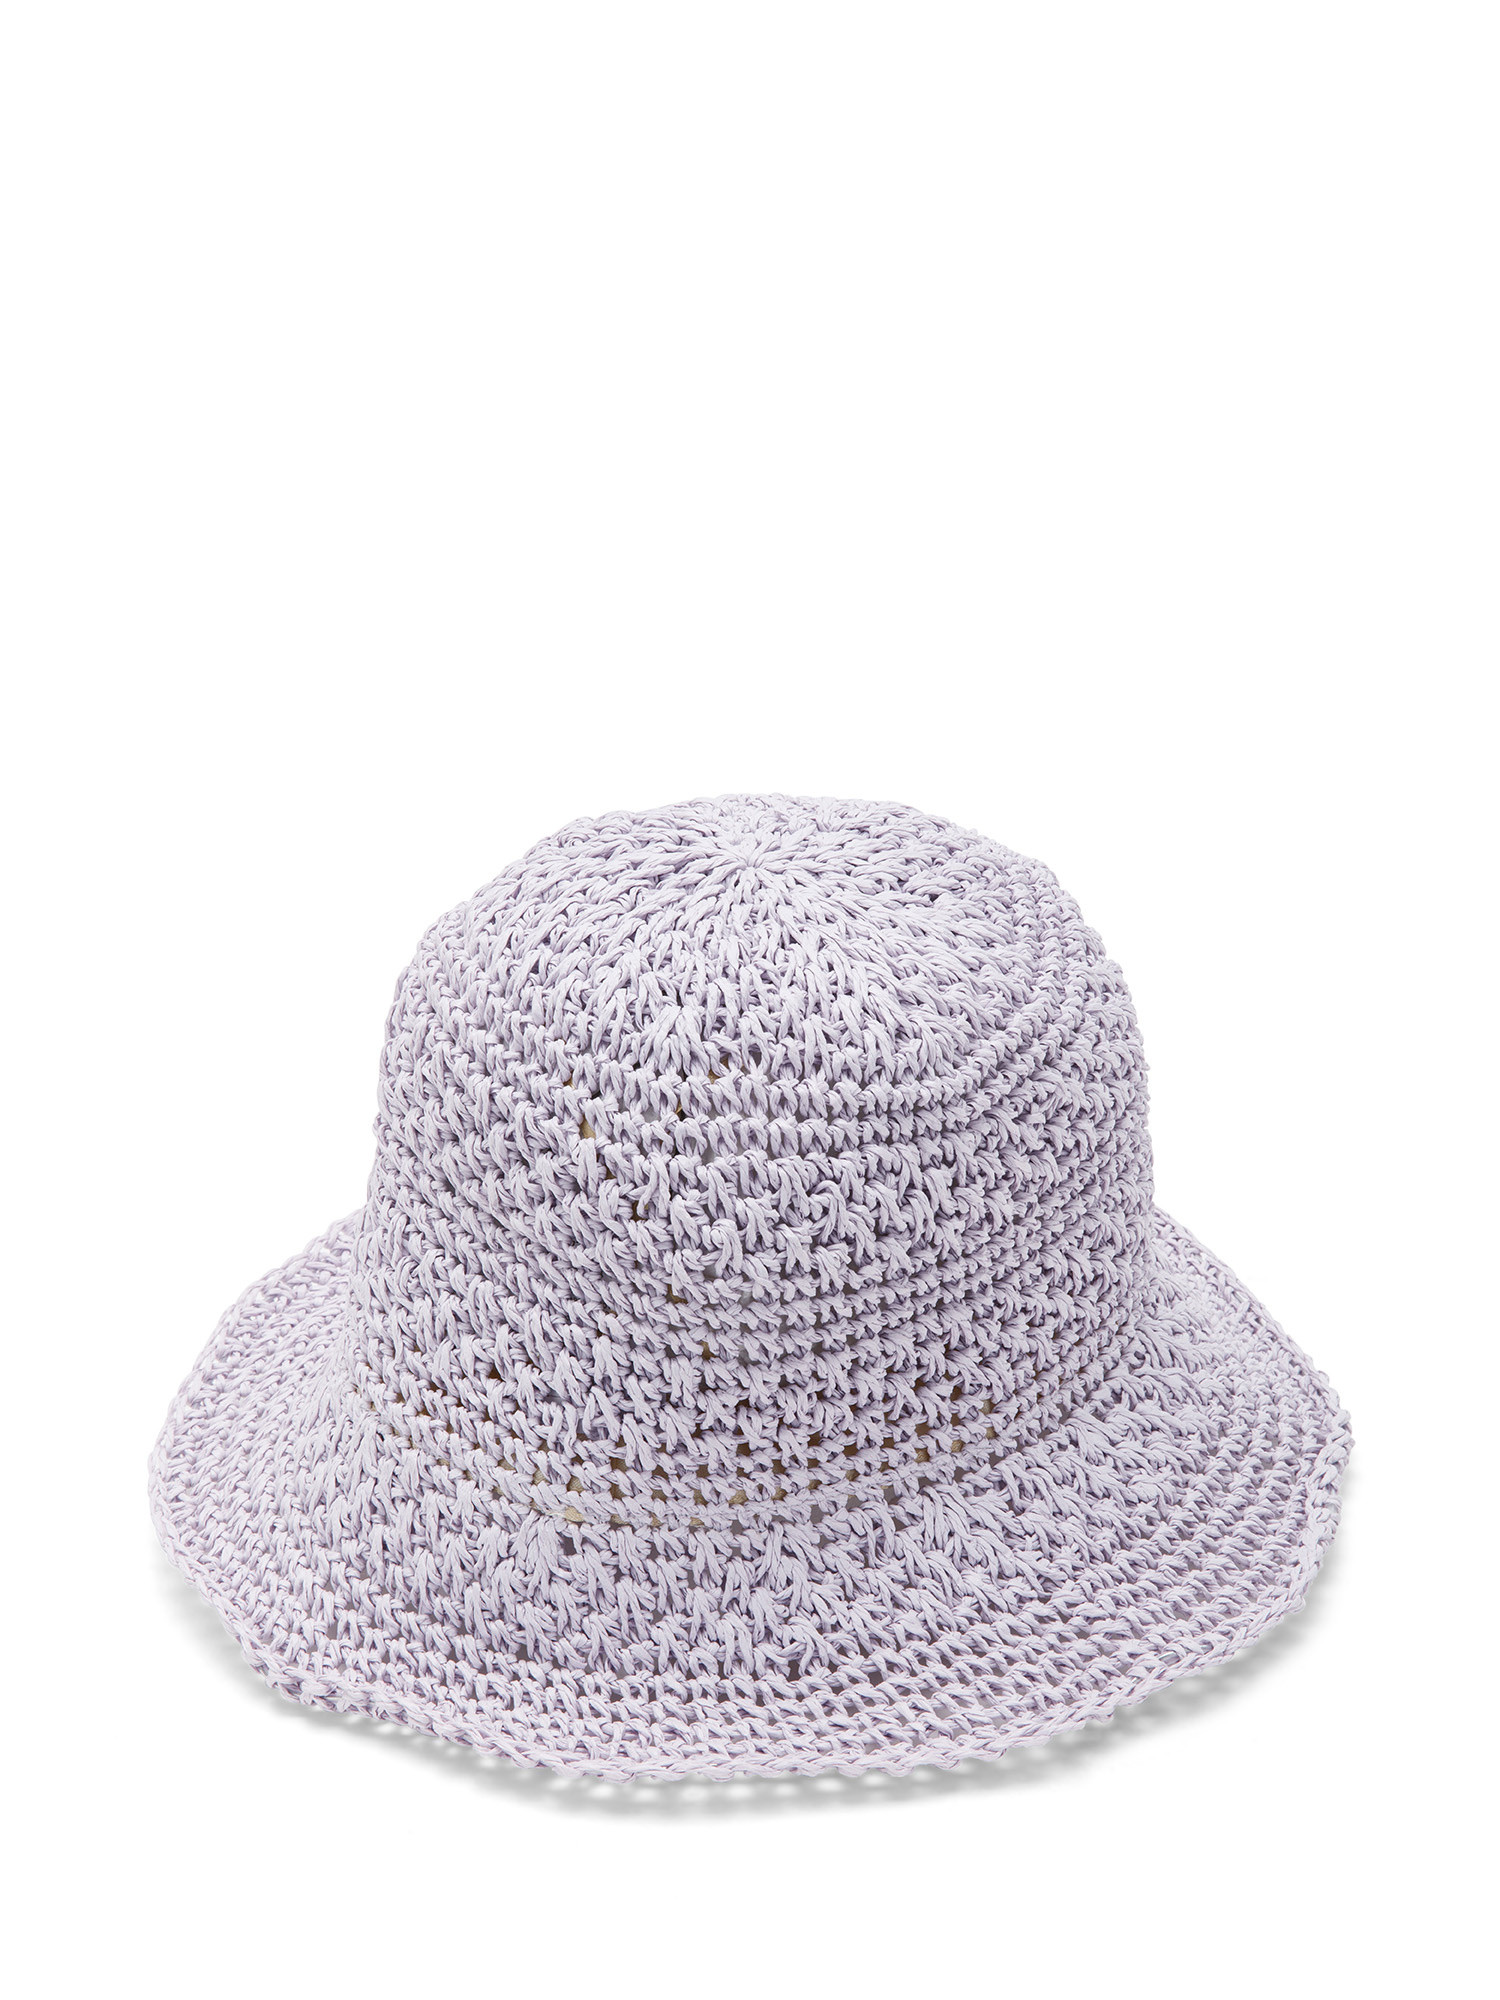 Koan - Braided hat, Purple Lilac, large image number 0